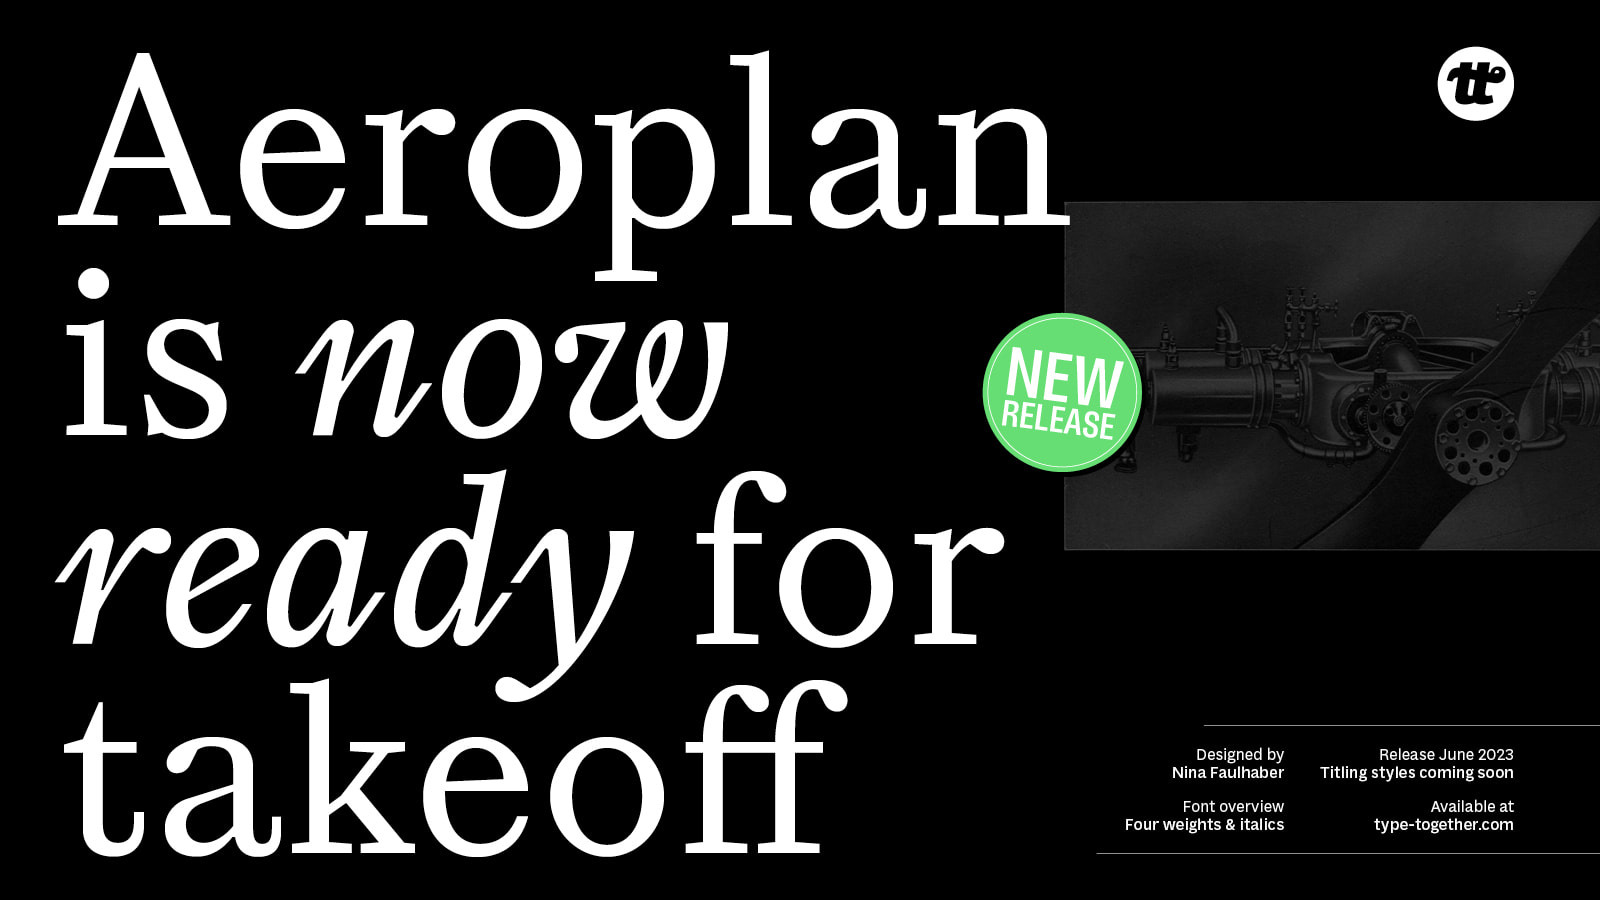 Aeroplan new release